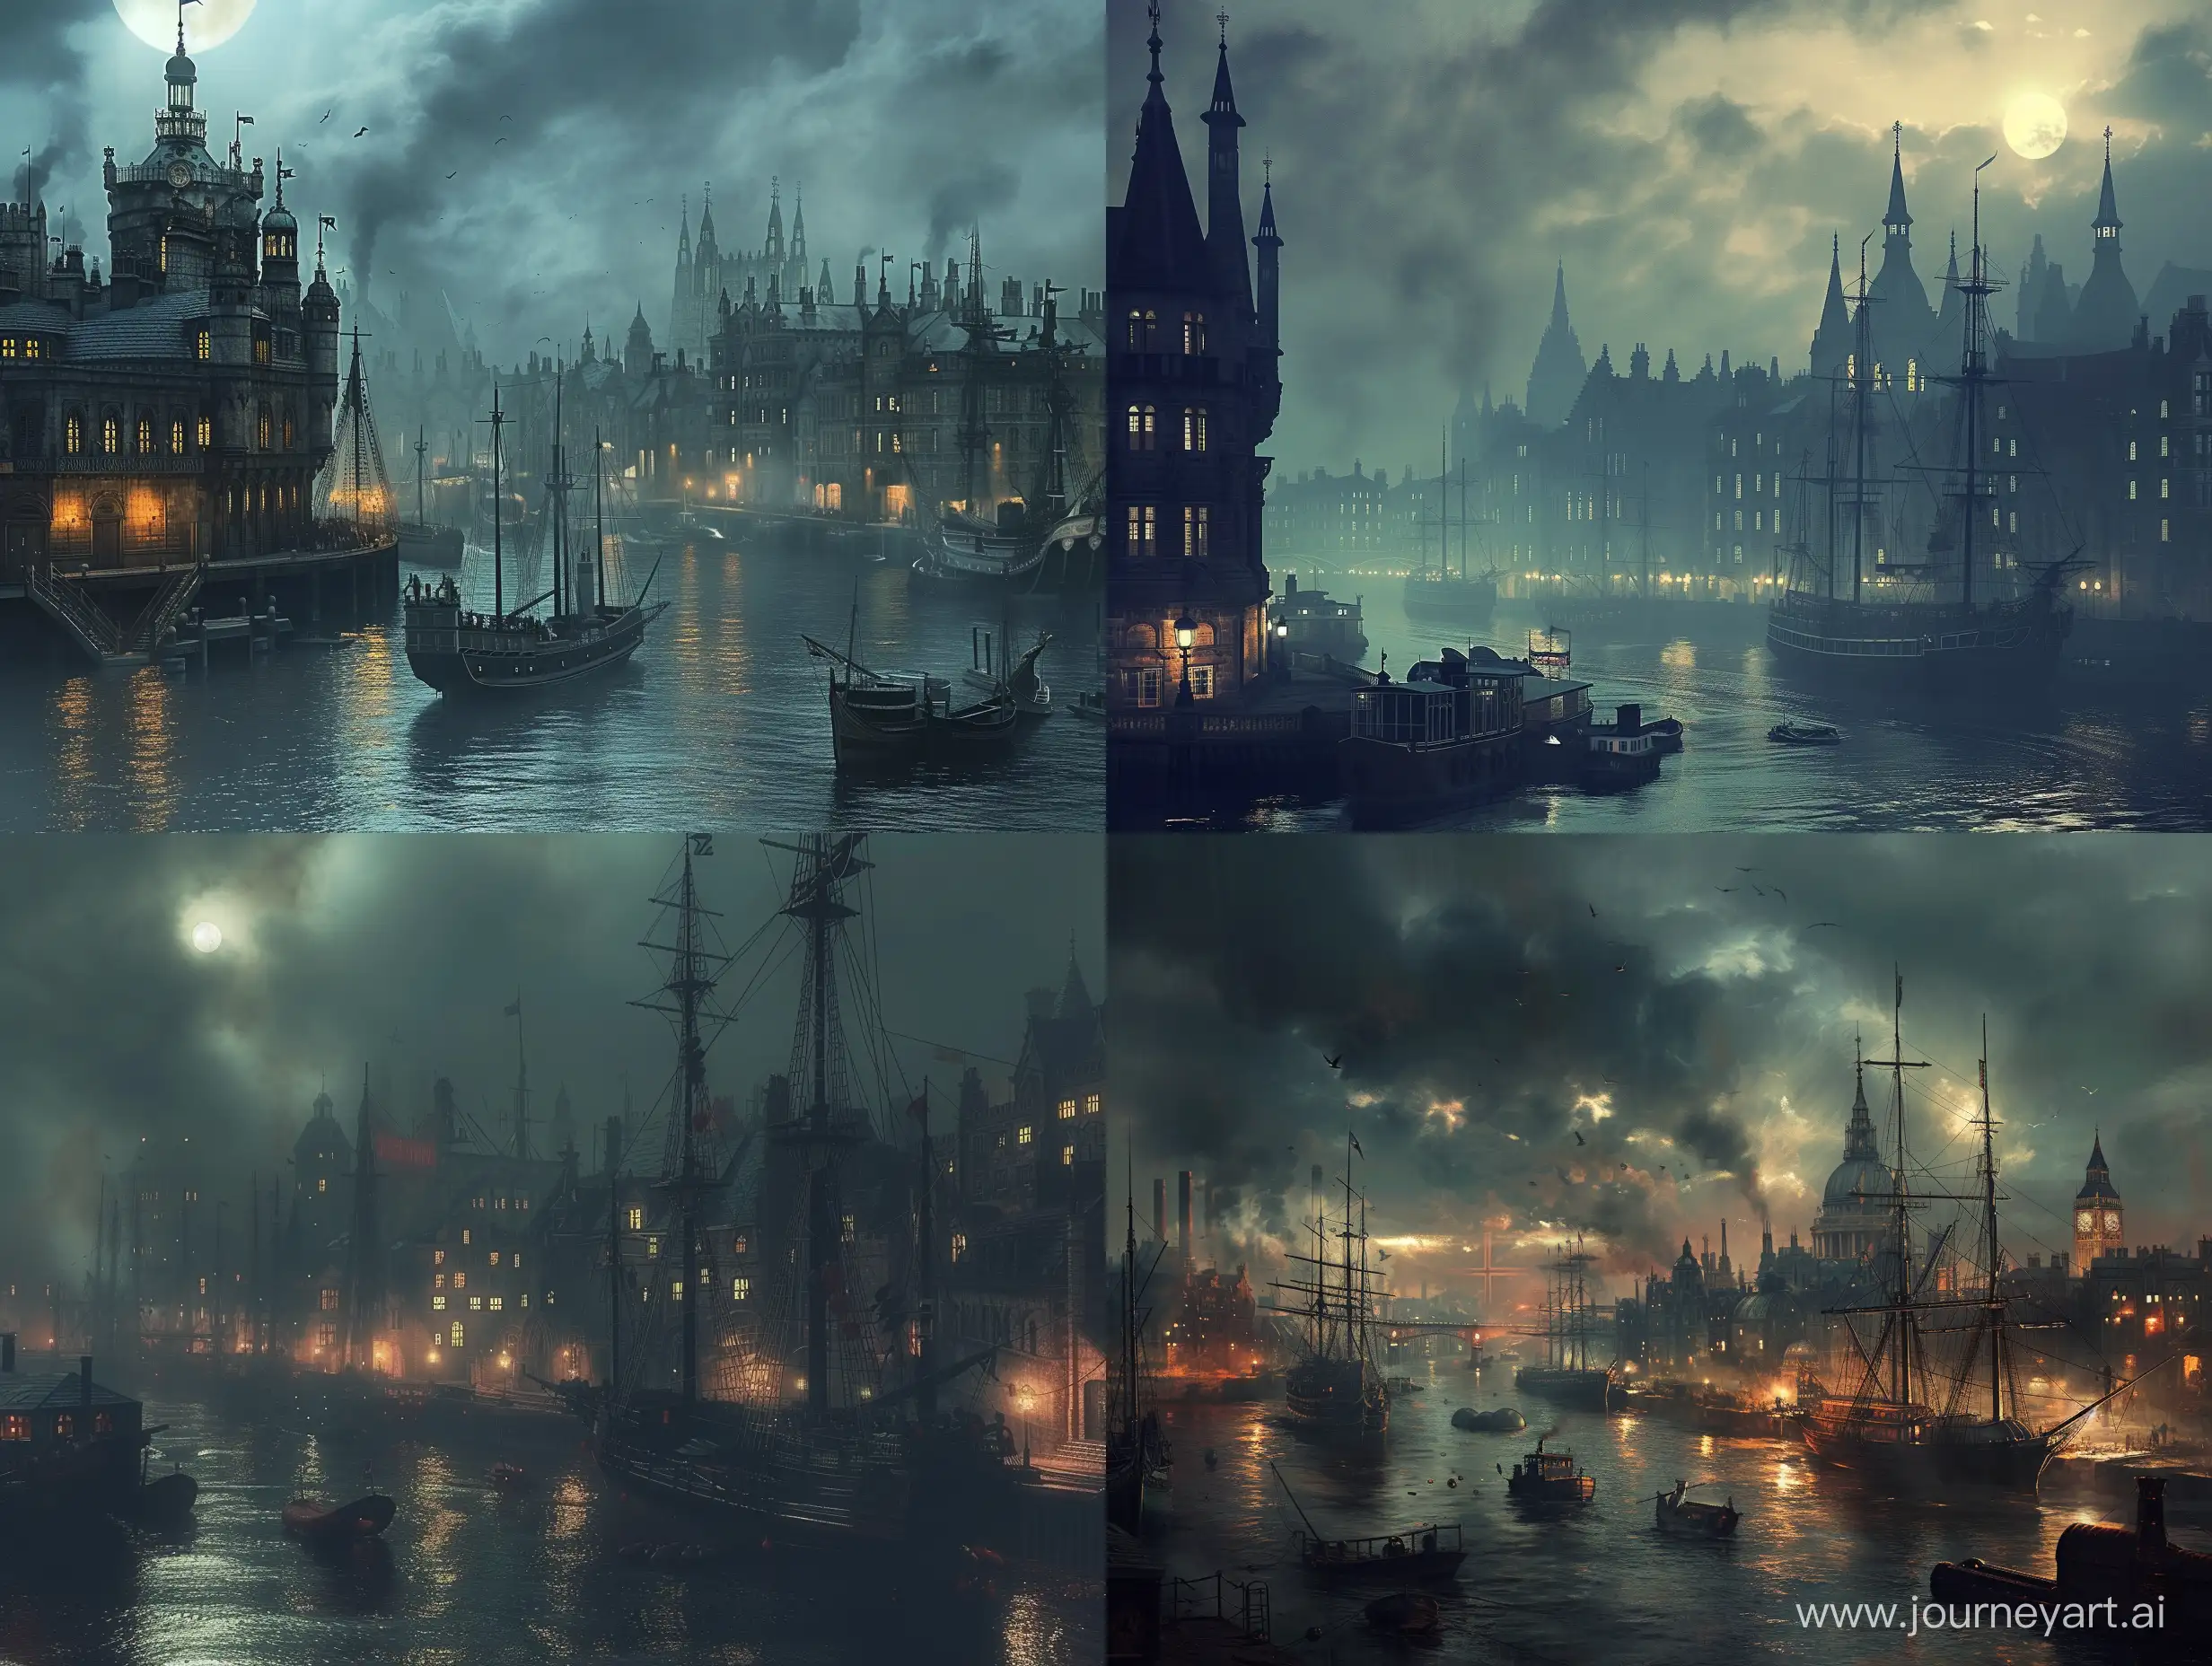 Gloomy-Fantasy-Port-Landscape-in-Old-London-Style-at-Night-4K-Ultra-HD-Wallpaper